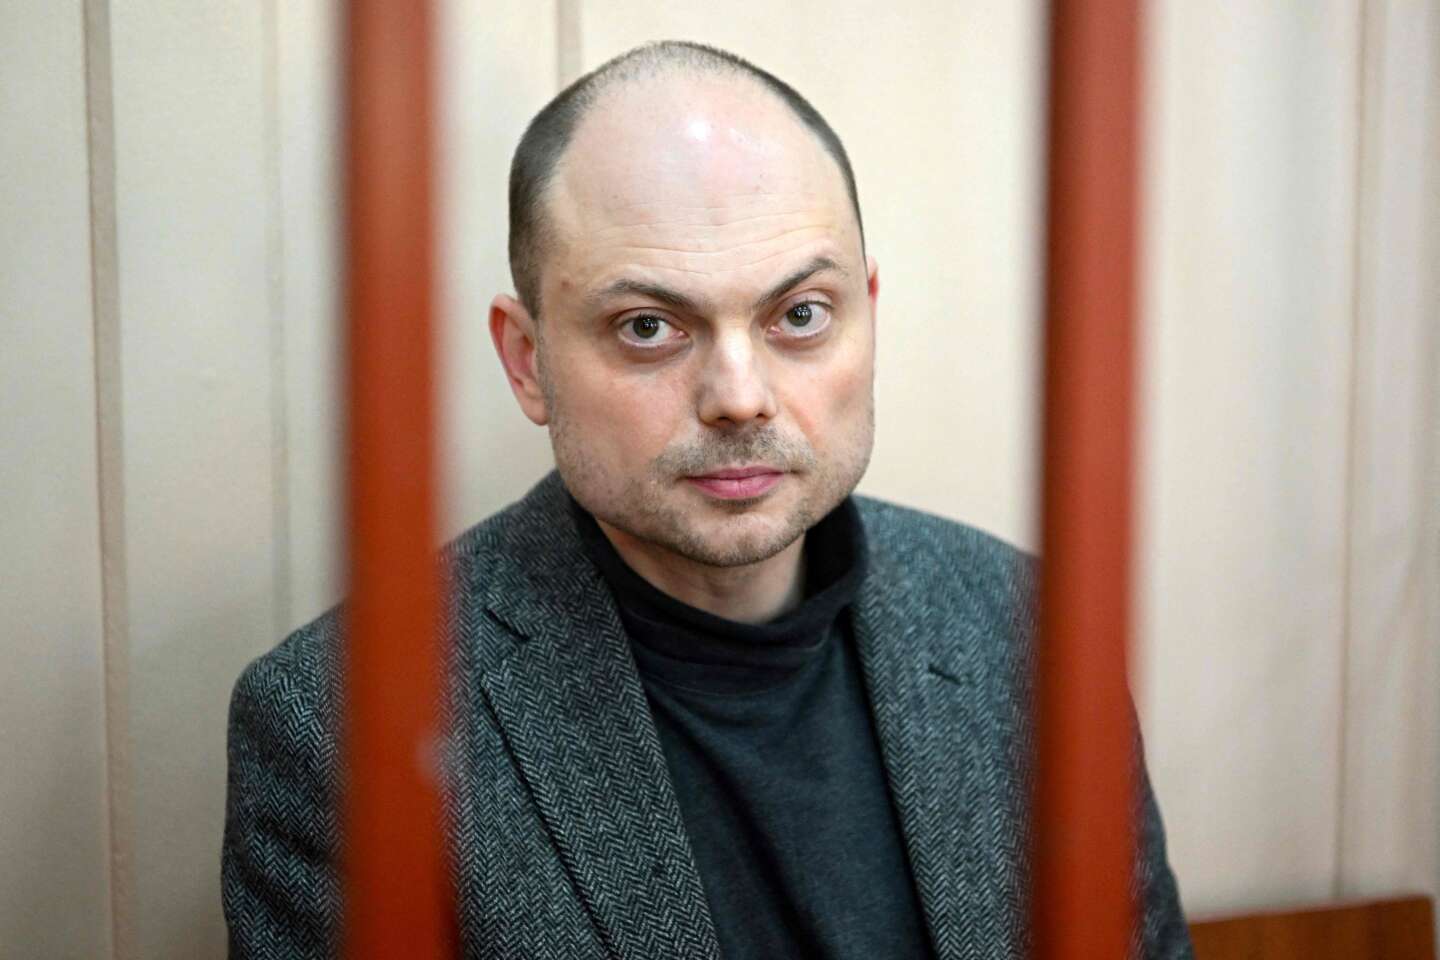 Vladimir Kara-Mourza, a longtime opponent of Vladimir Putin, was sentenced to 25 years in prison.